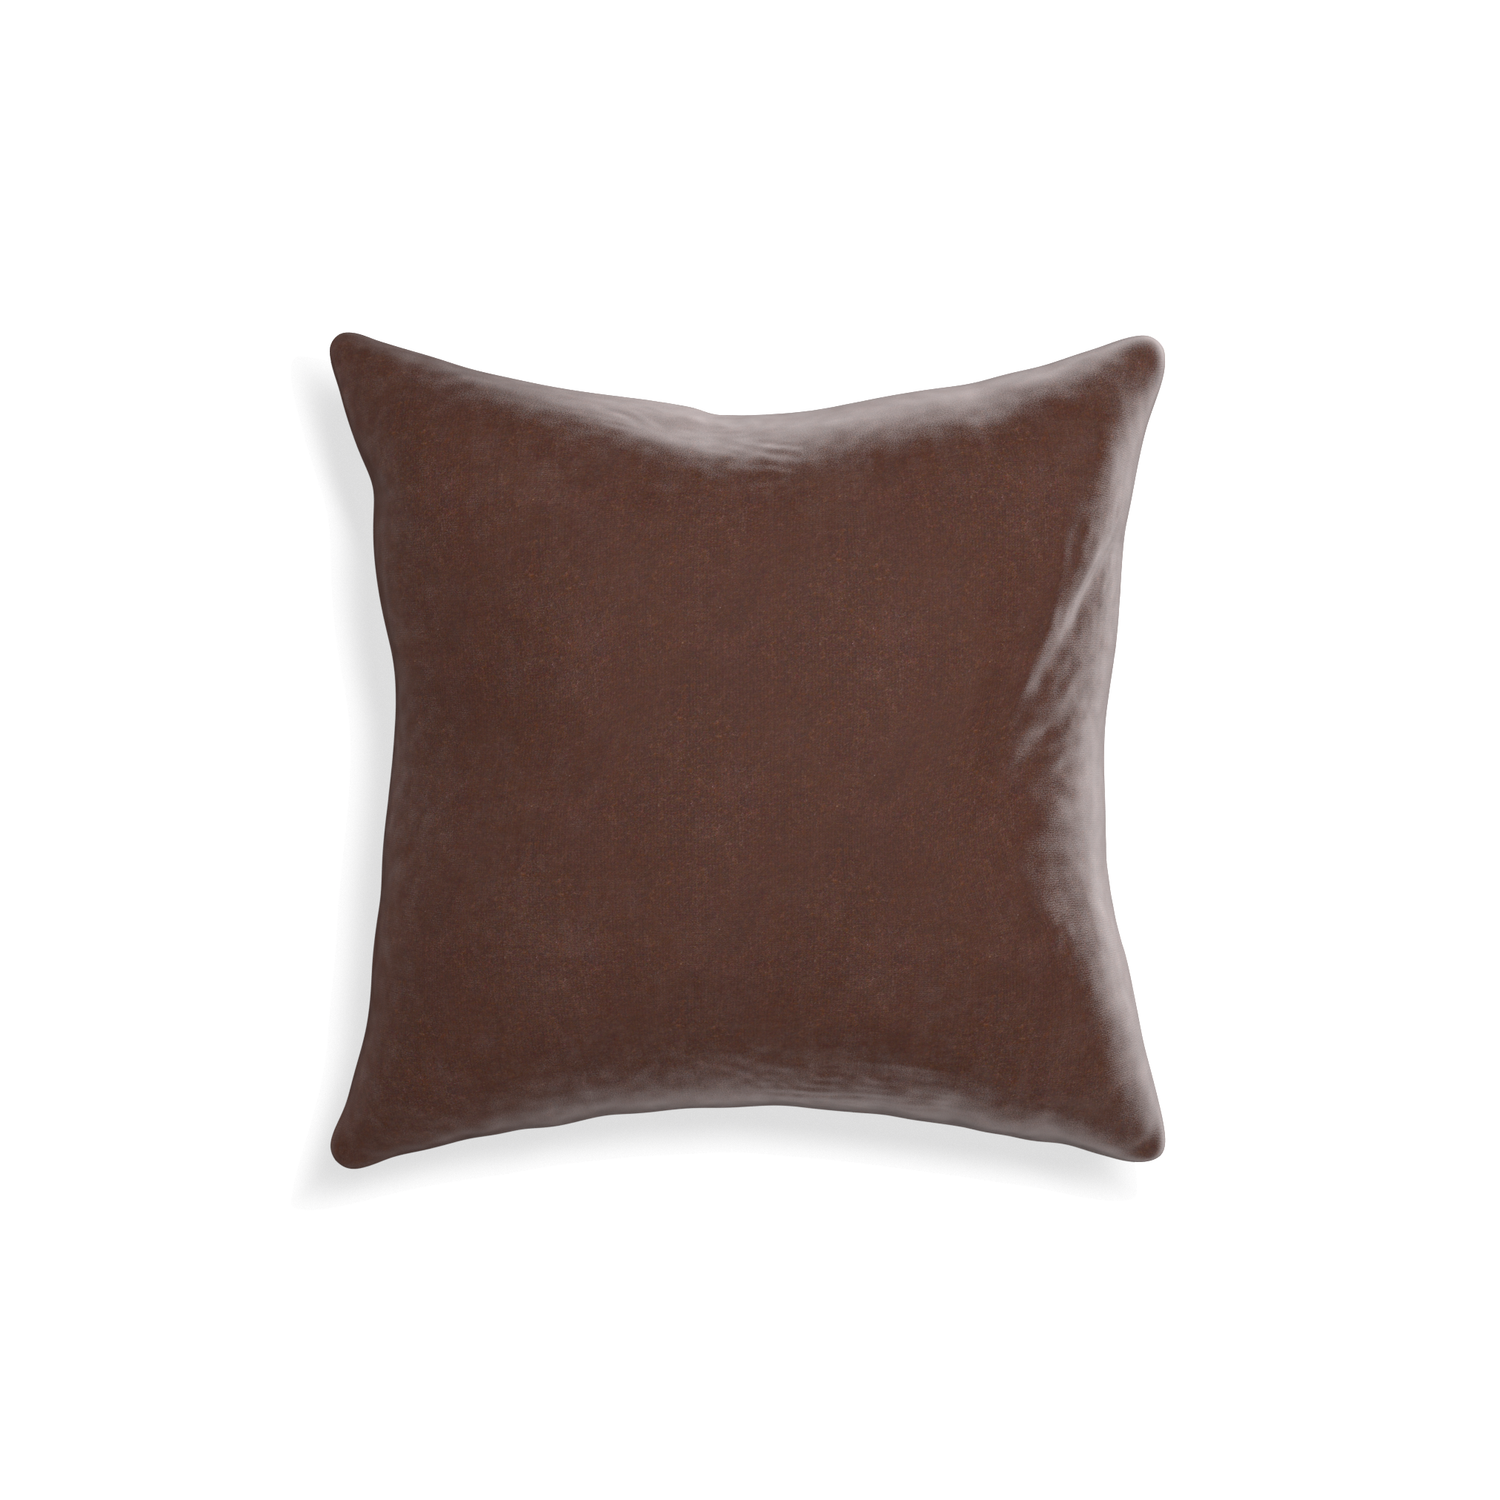 18-square walnut velvet custom pillow with none on white background